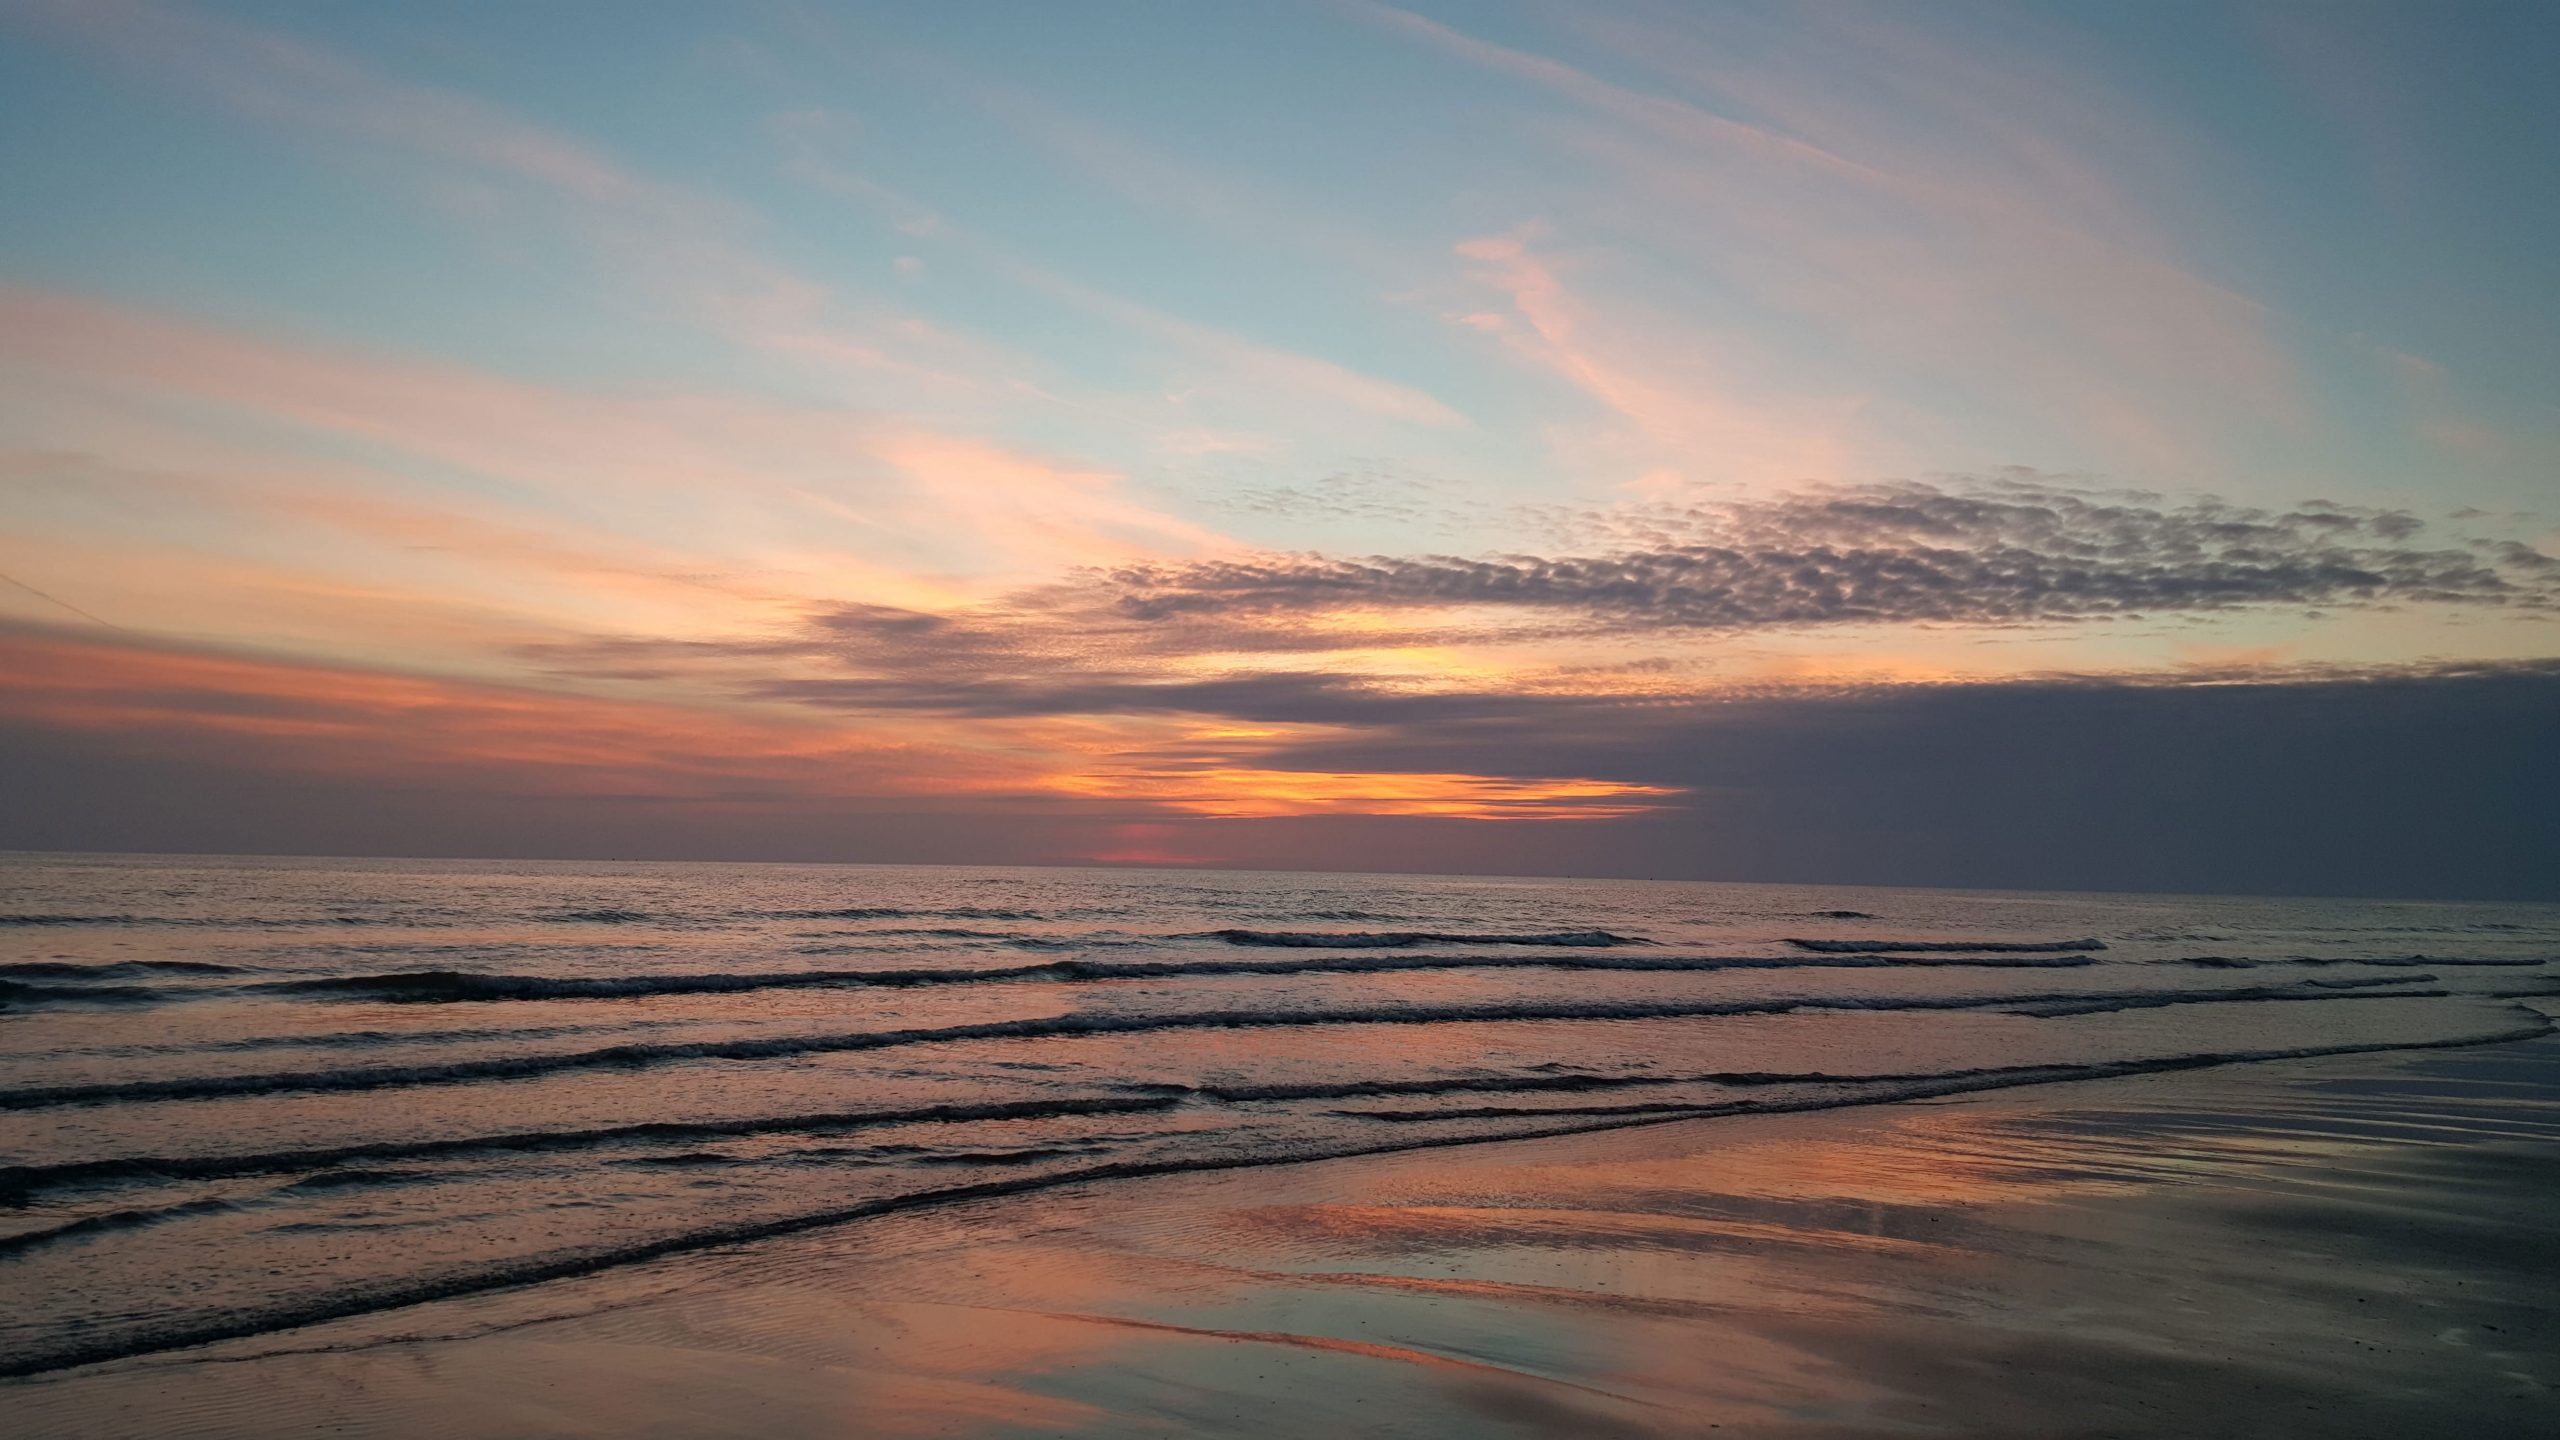 Nederland wallpaper, sun, sand, sea, beach, sunset, sky, water, scenics – nature